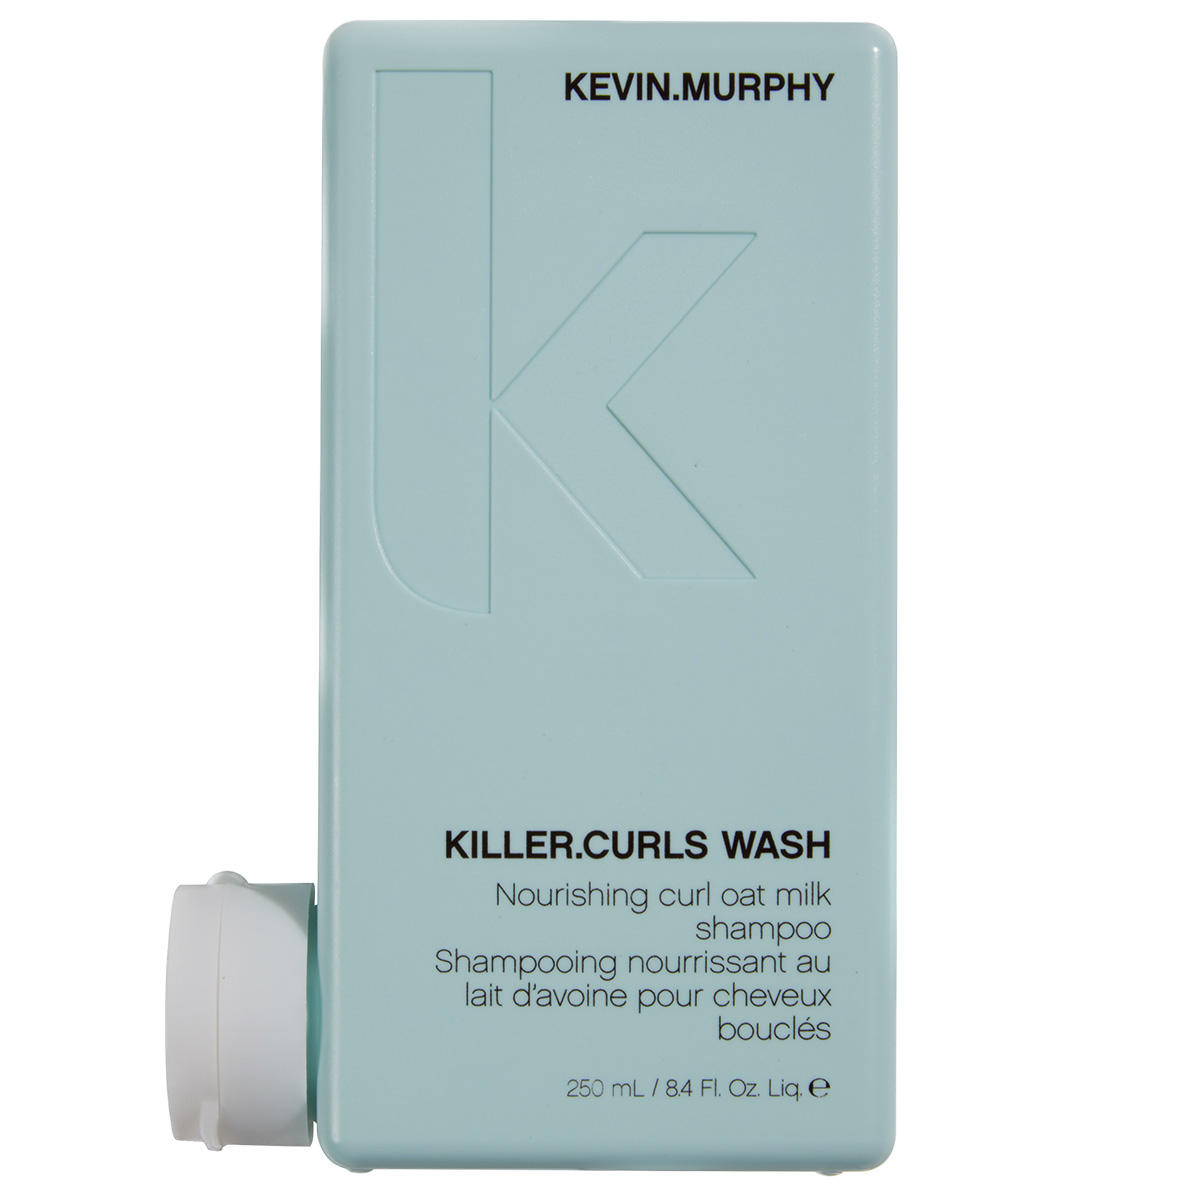 KEVIN.MURPHY KILLER.CURLS WASH  - 1